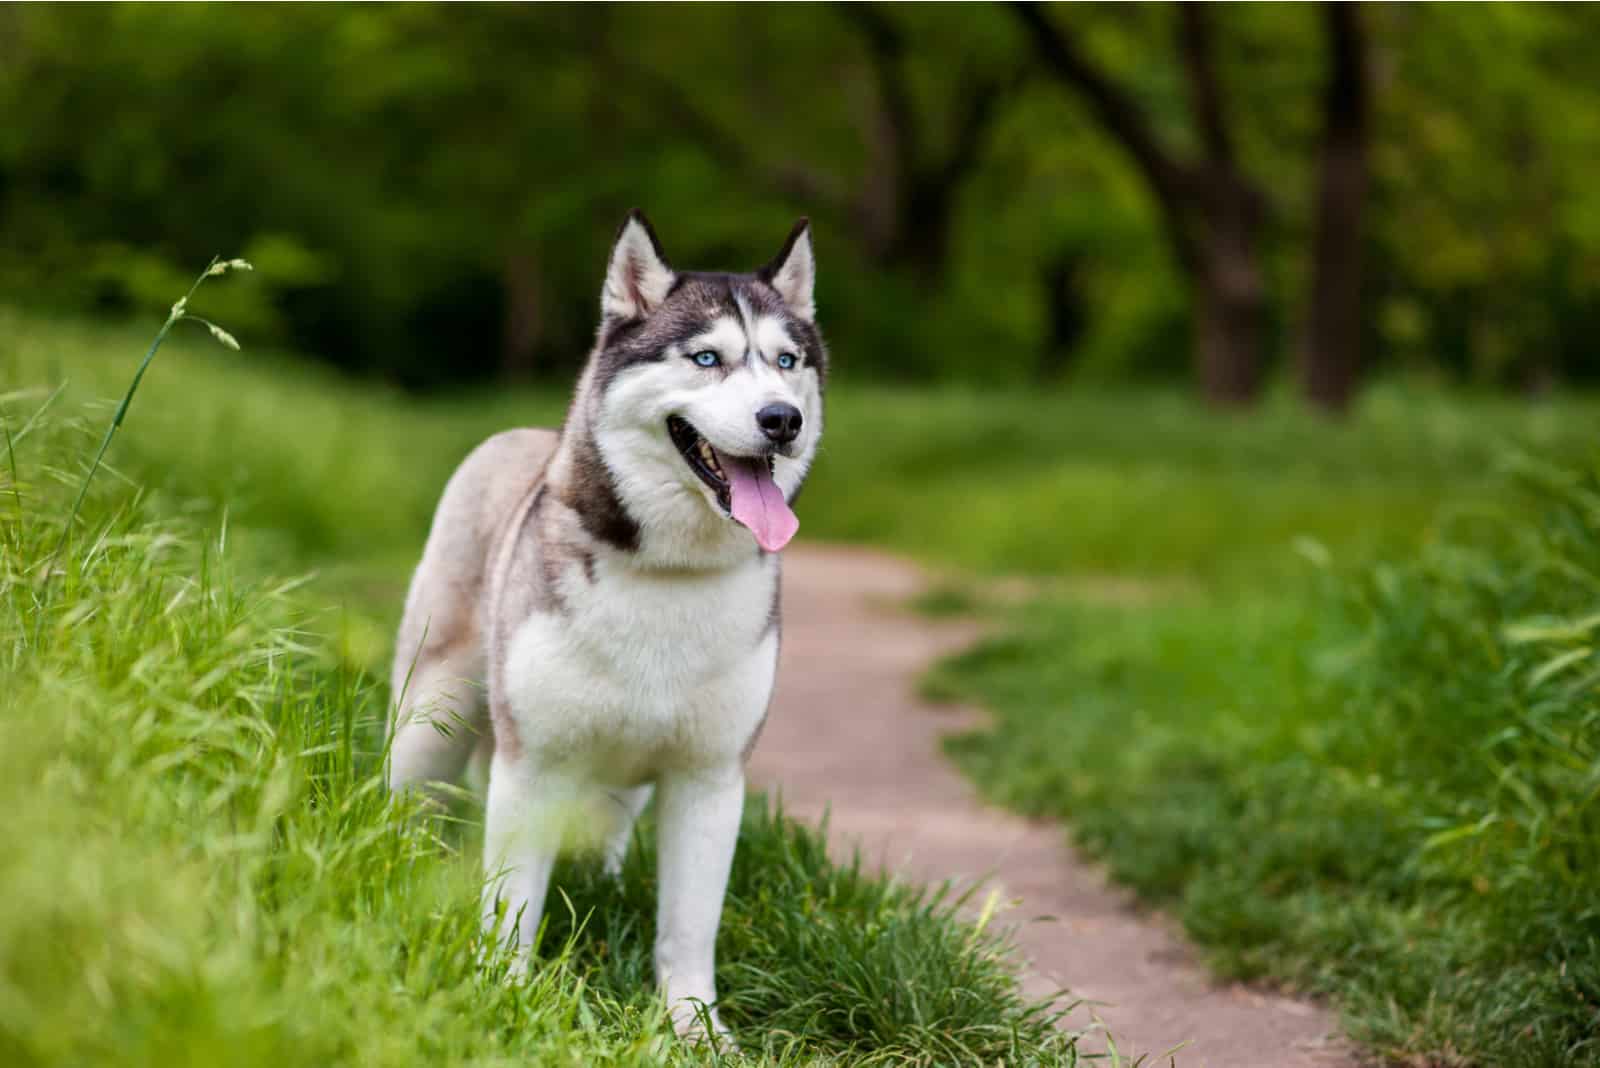 Husky standing on grass